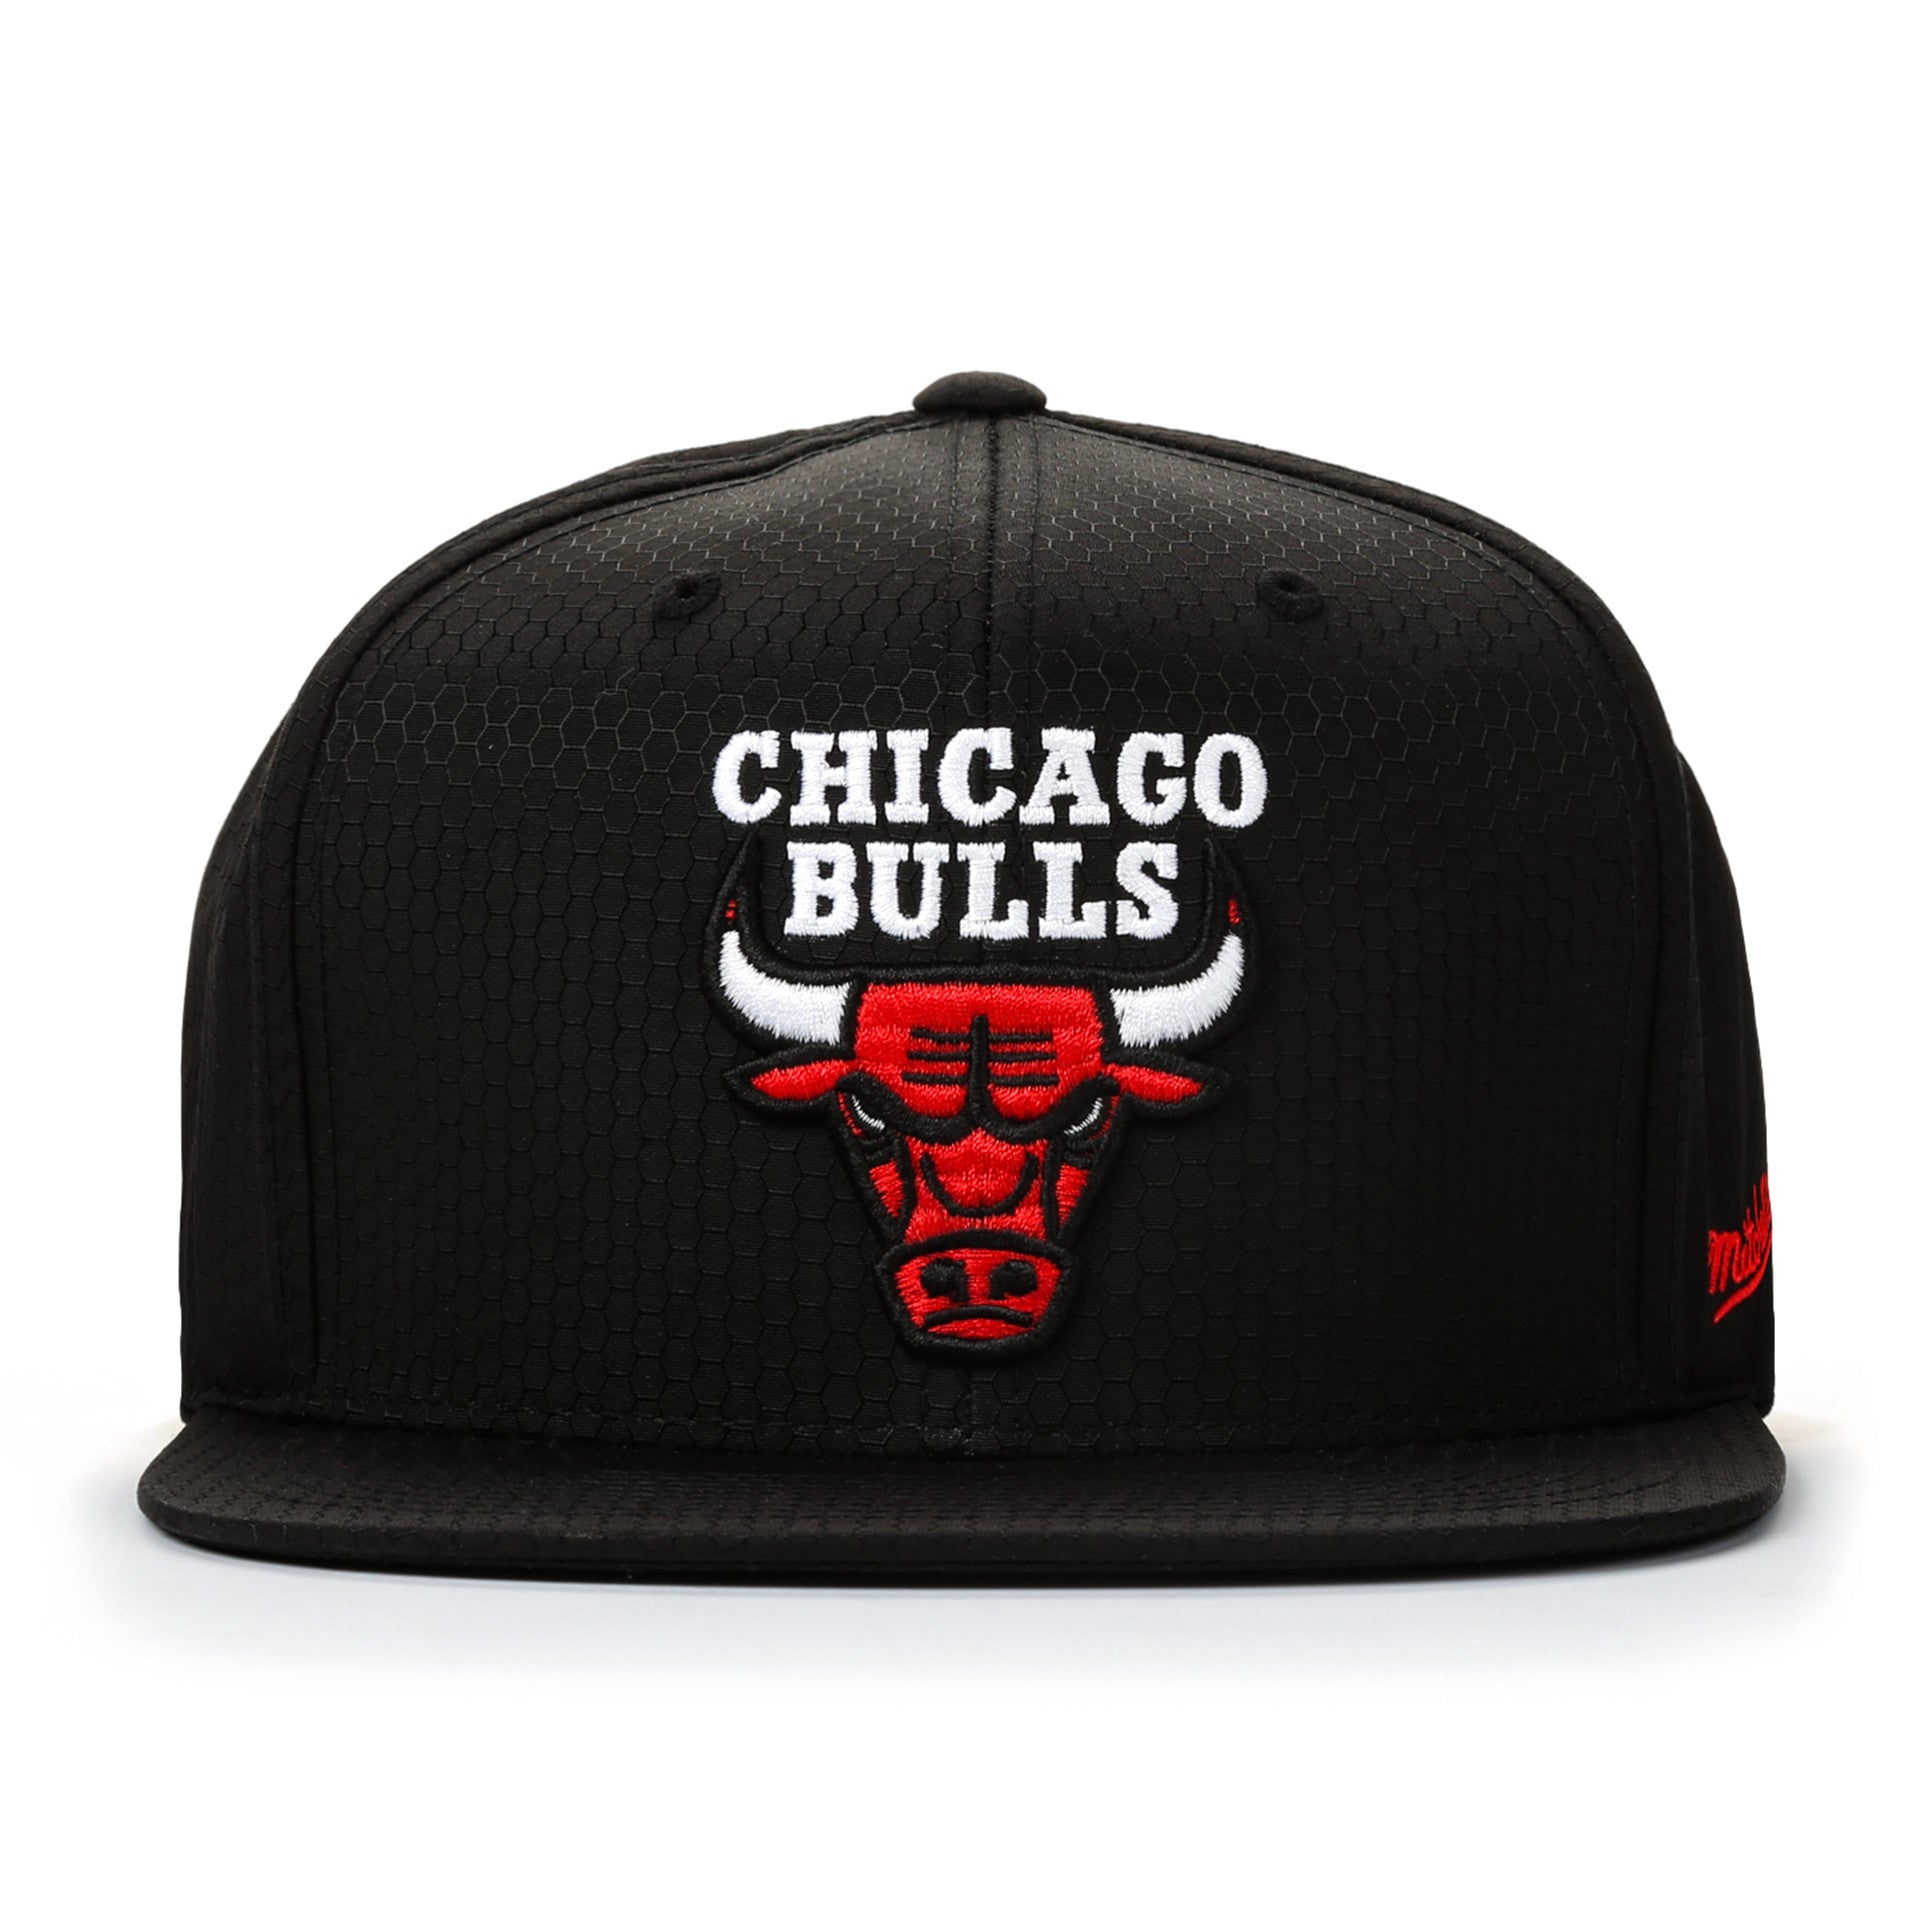 Mitchell & Ness Chicago Bulls Snapback Hat Adjustable Cap - Black/Red